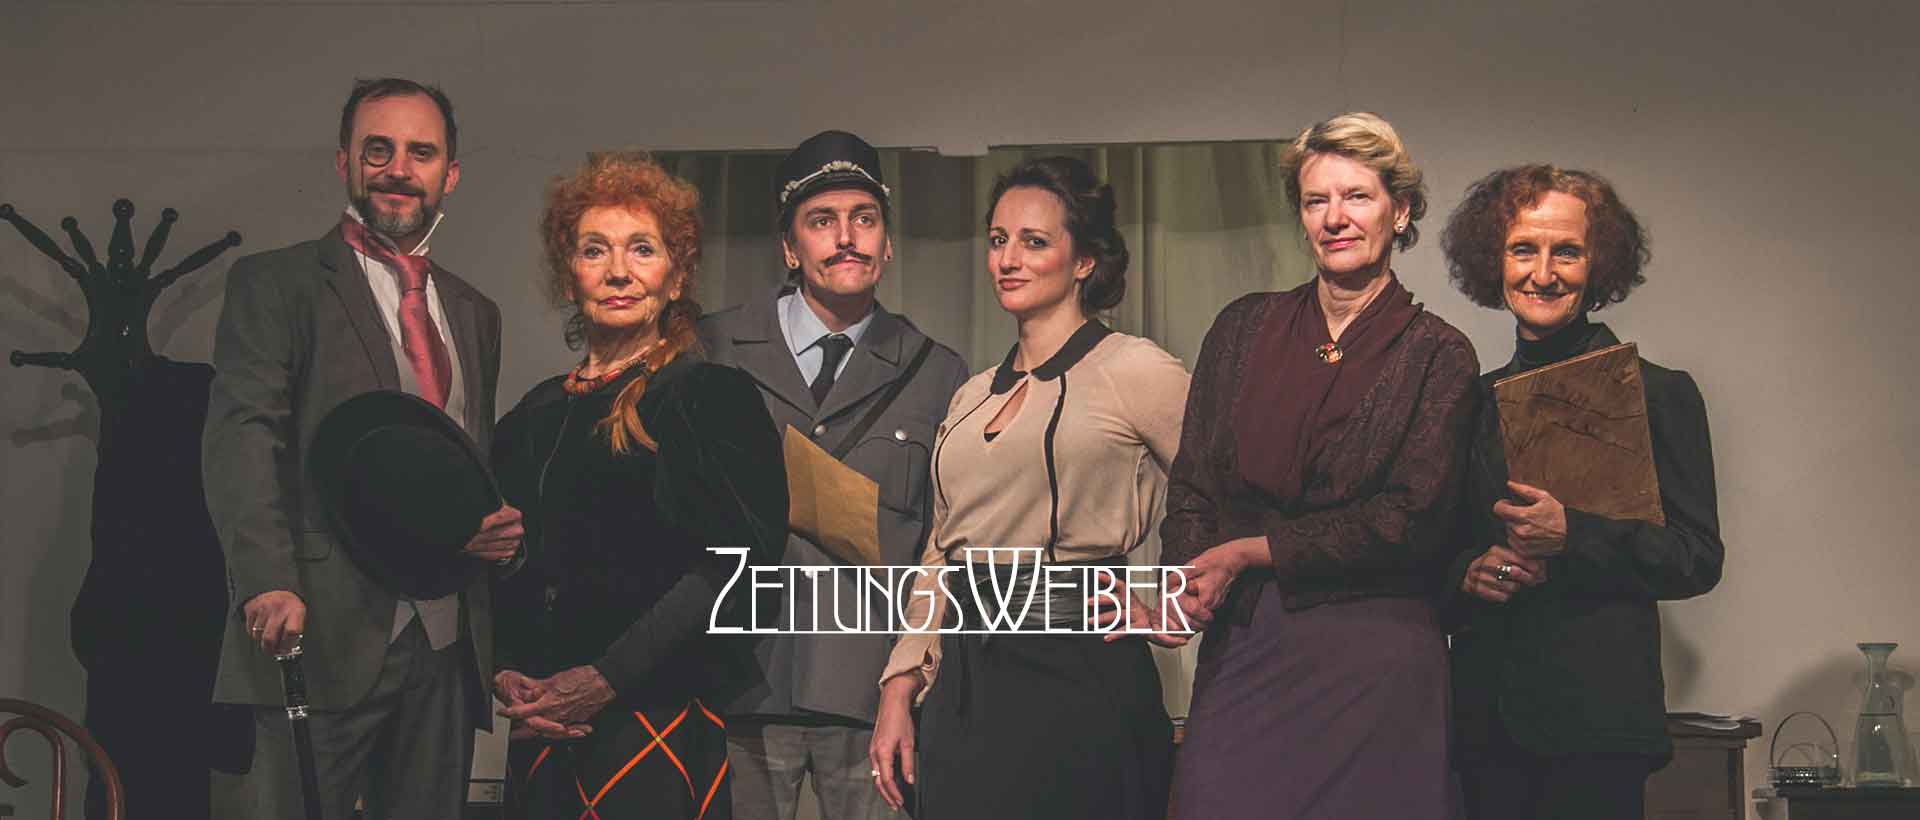 Das Ensemble des Theaterstücks "Zeitungsweiber"